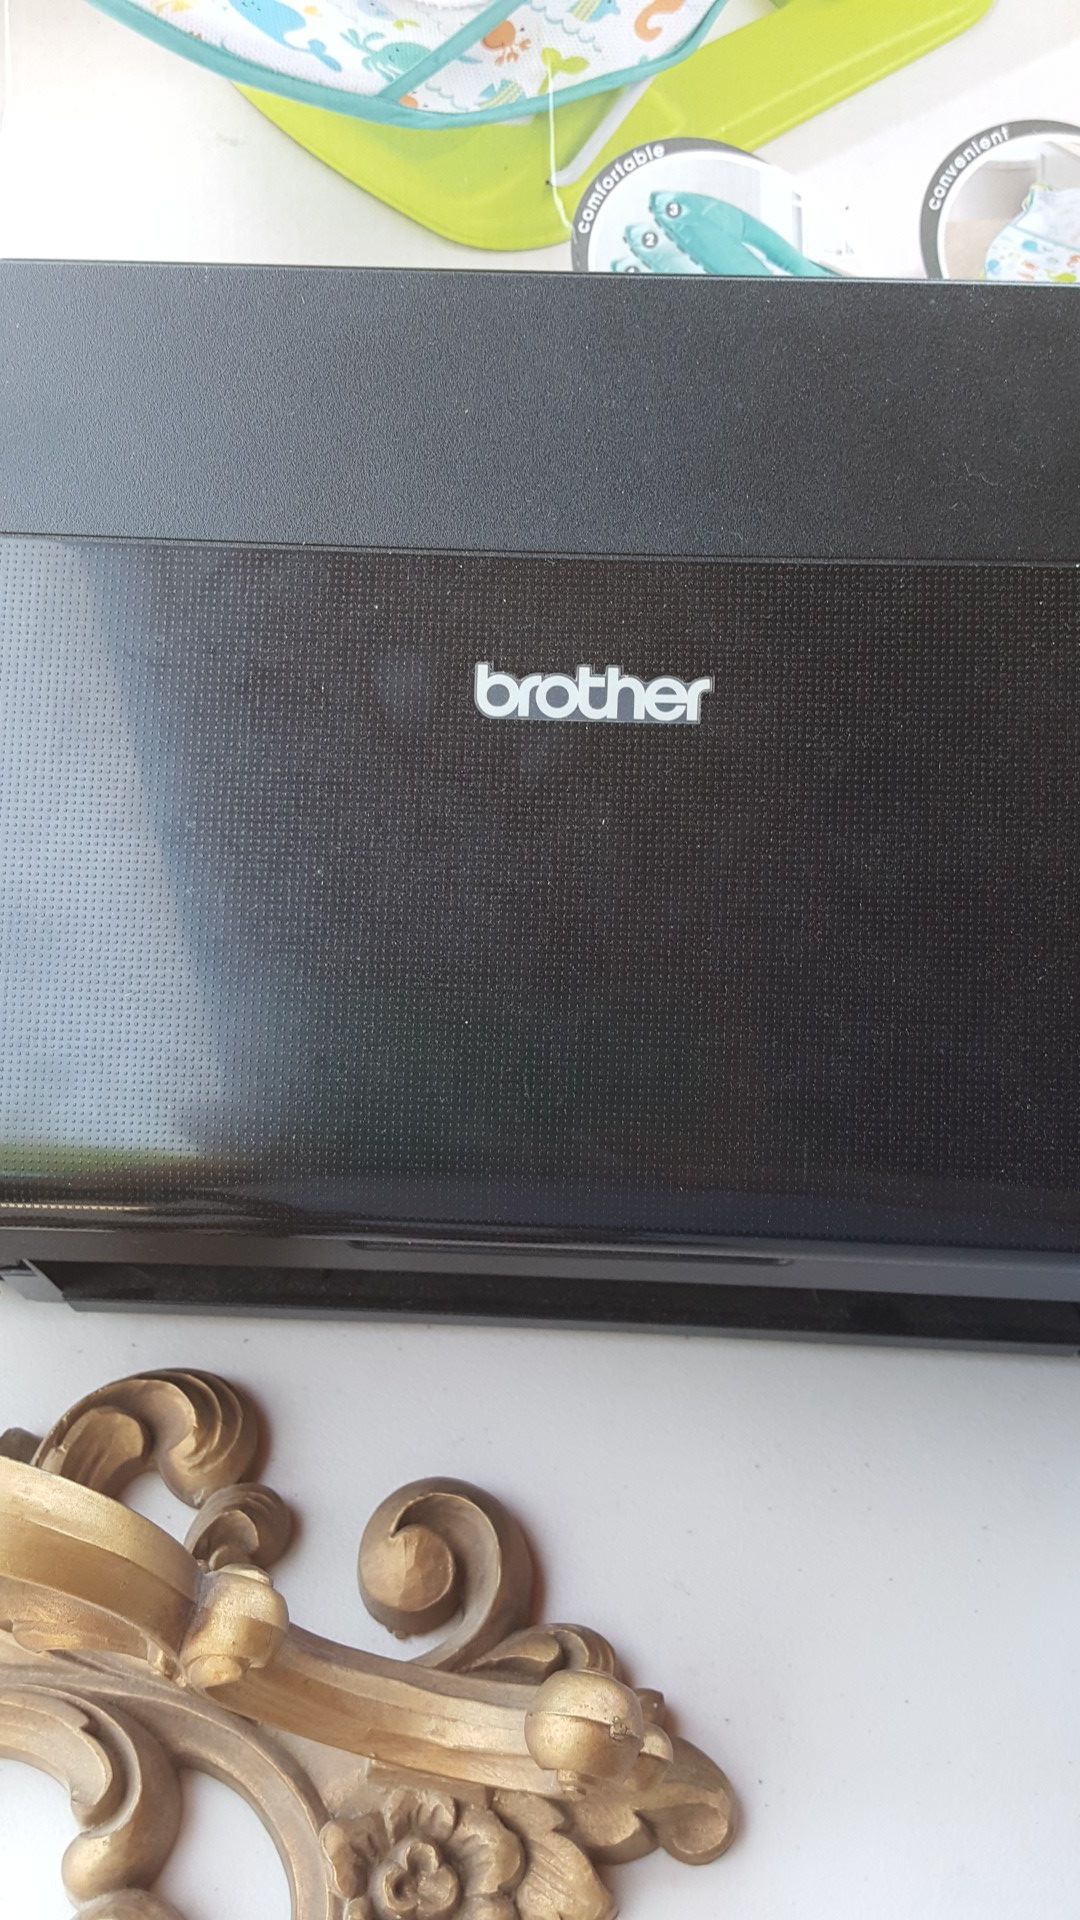 Brother scanner